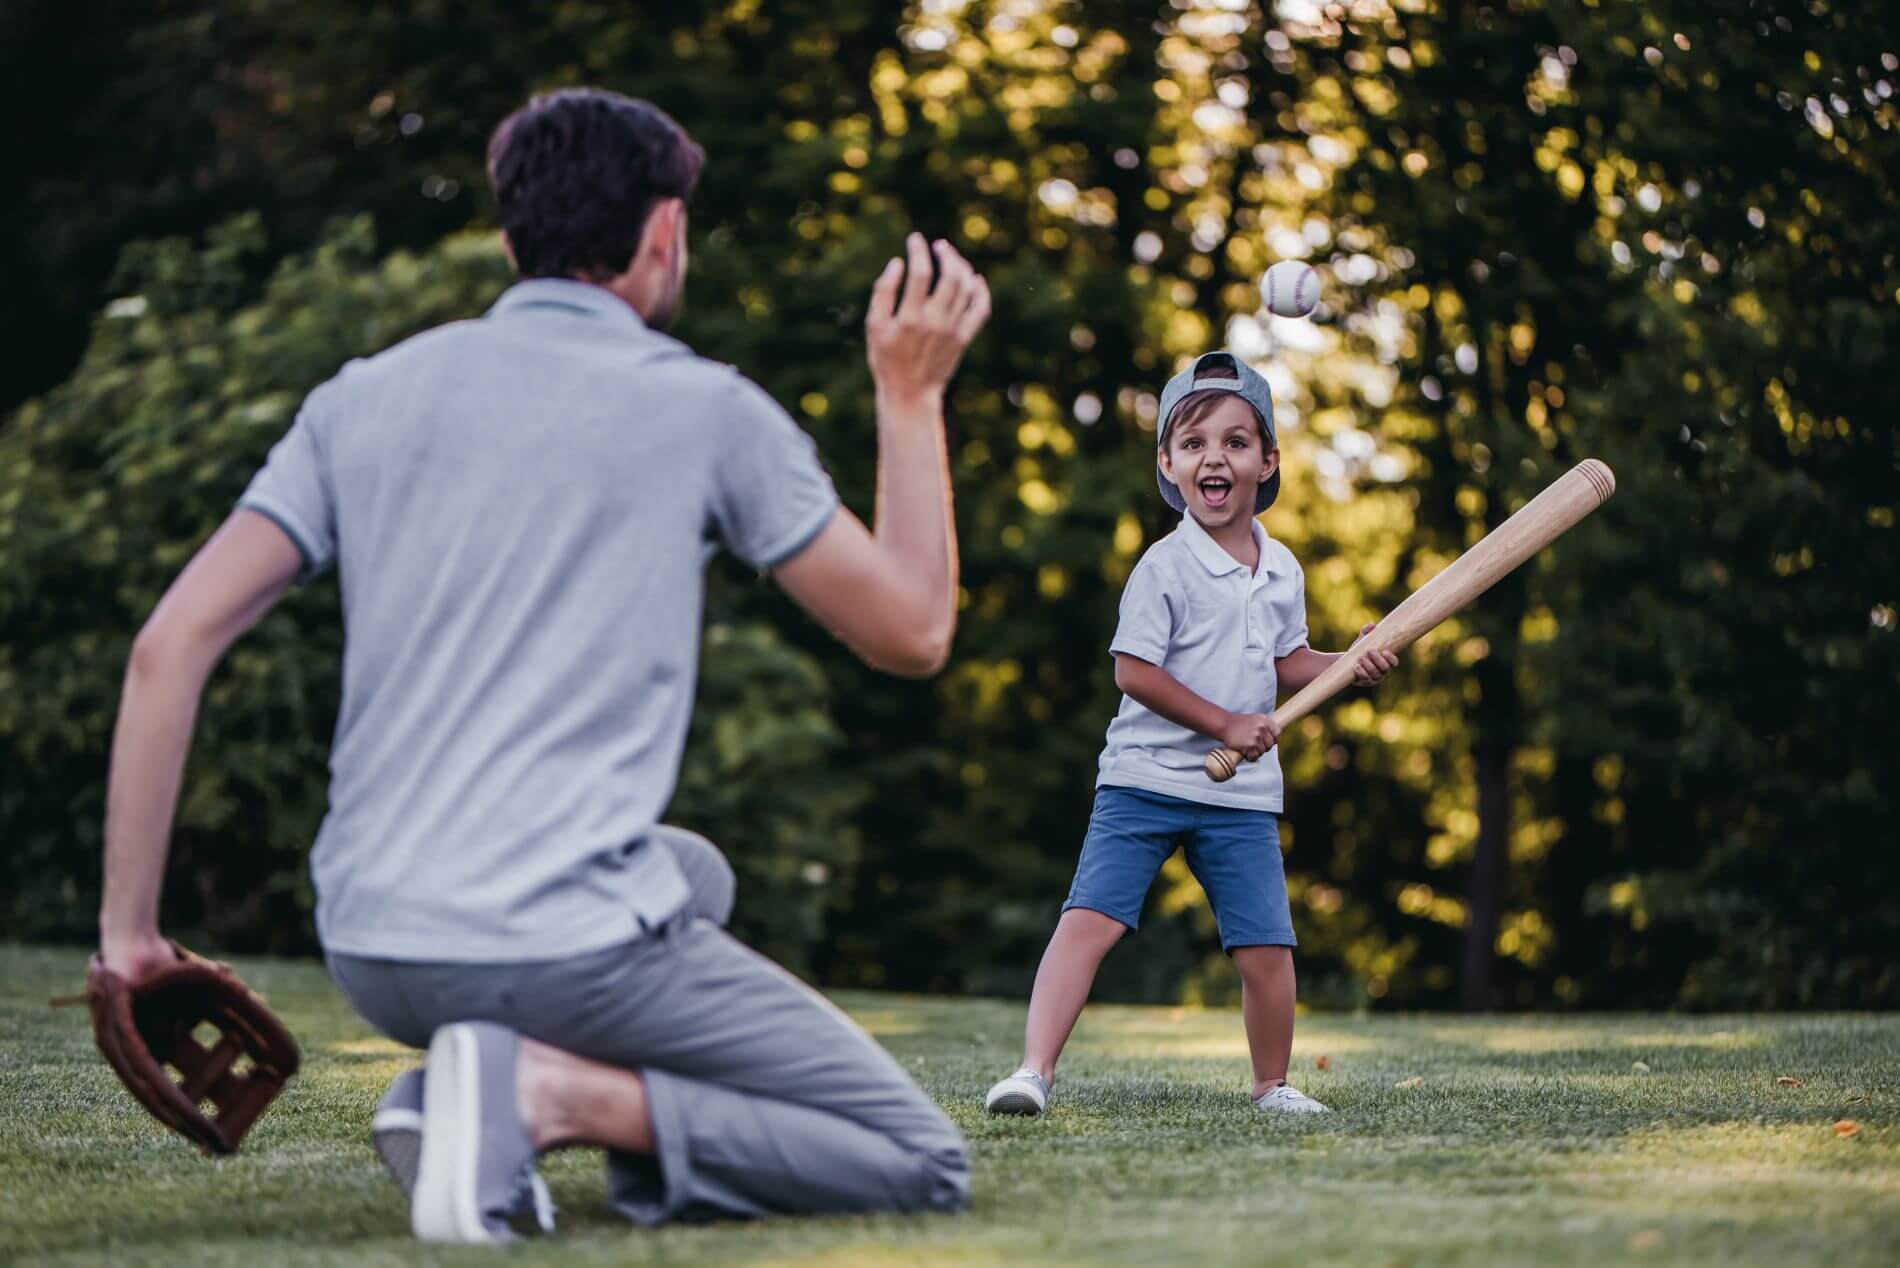 Child playing baseball with man.